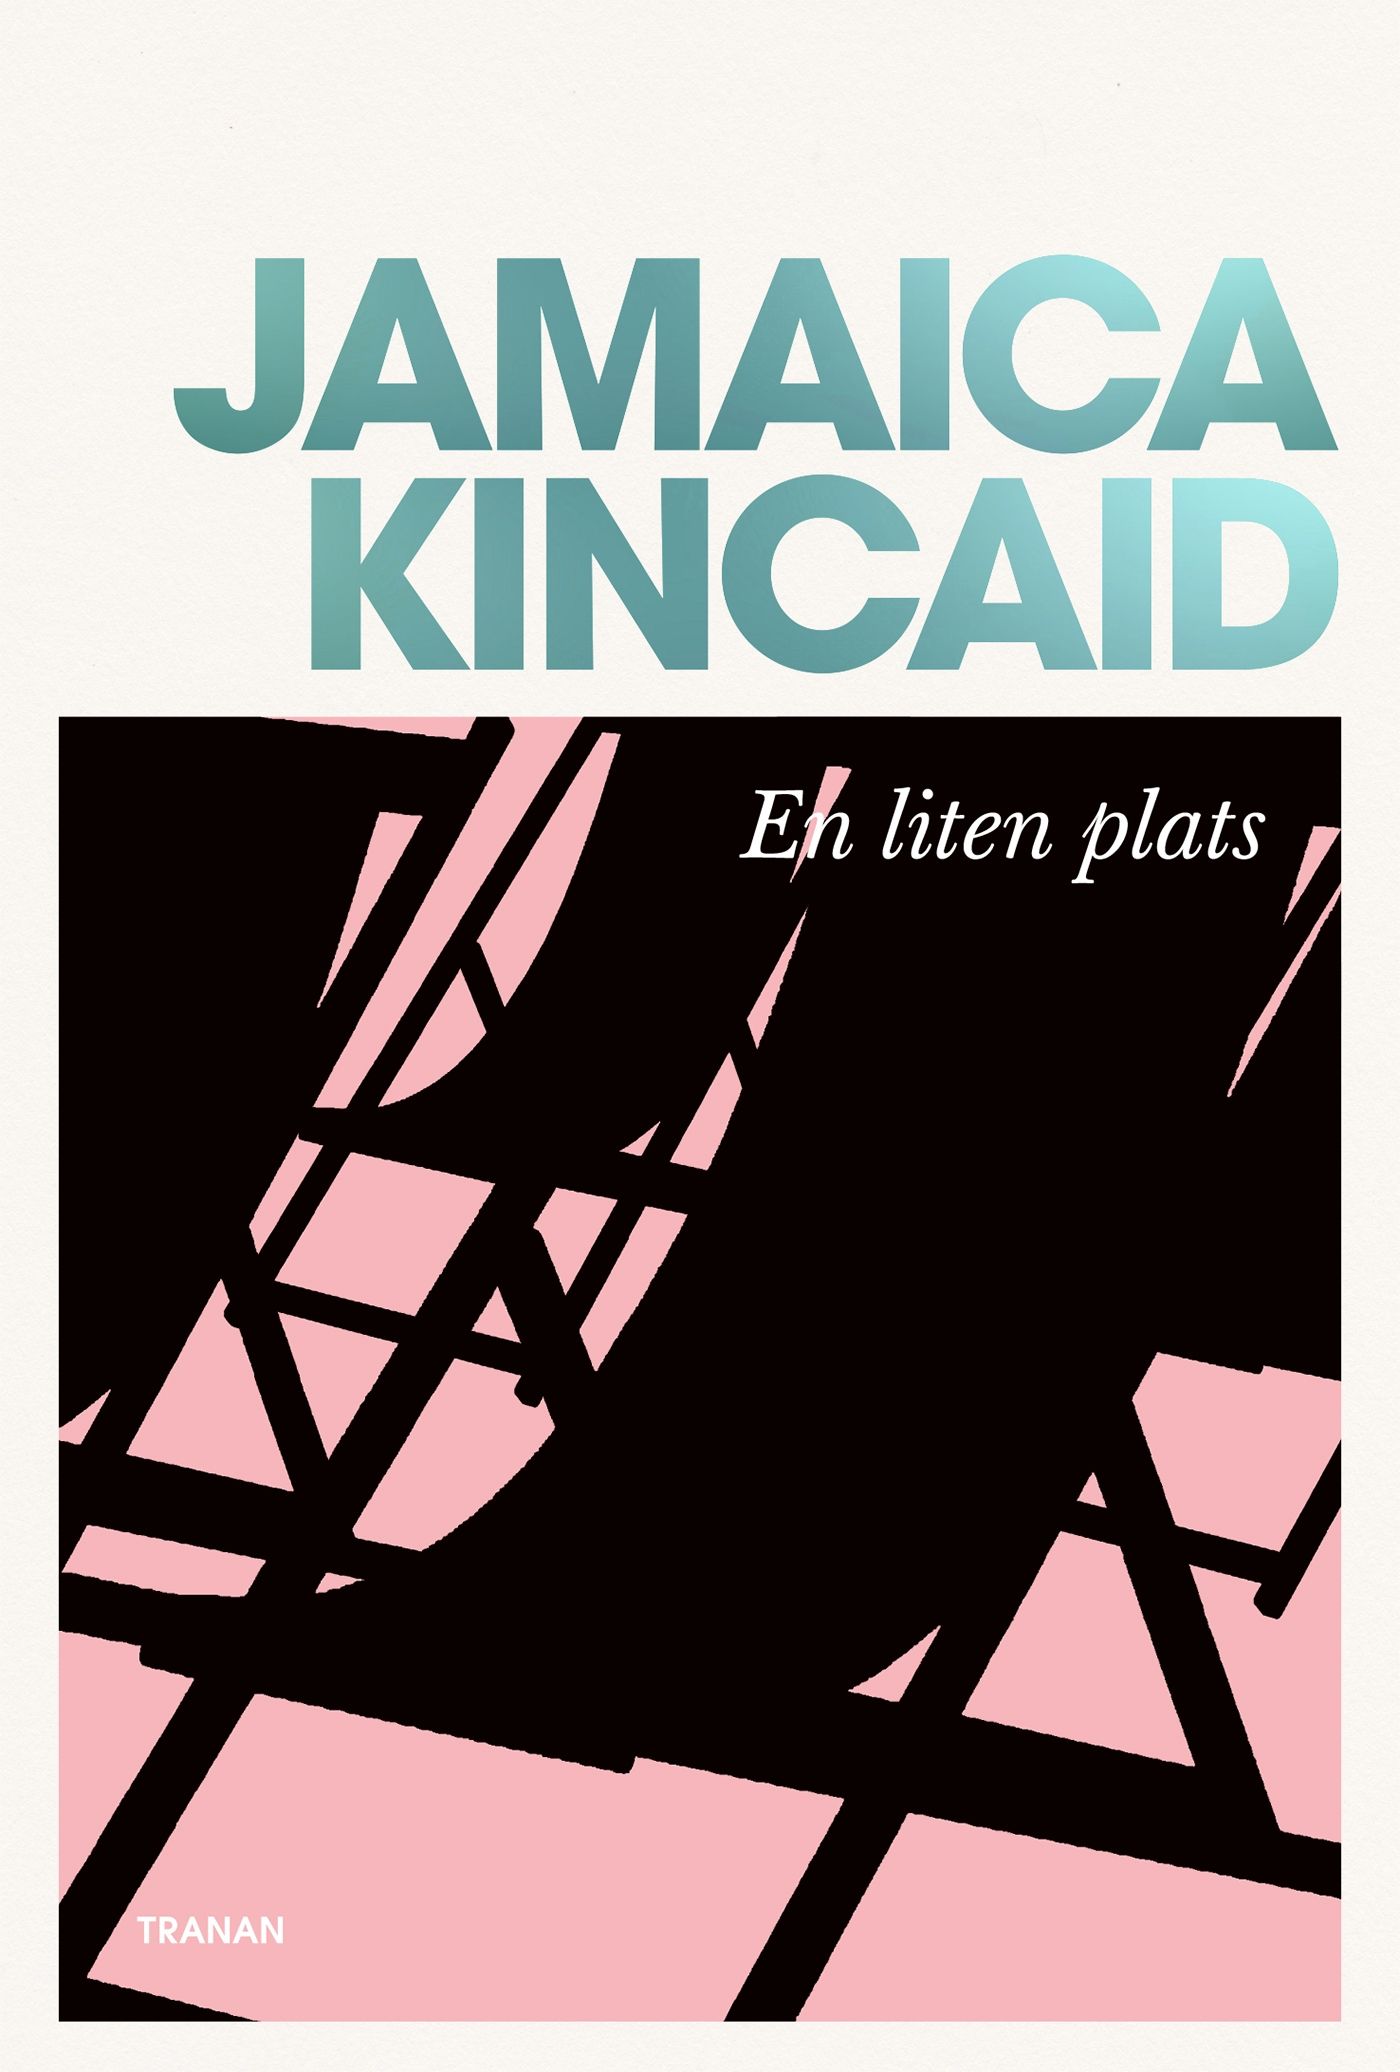 En liten plats, e-bog af Jamaica Kincaid